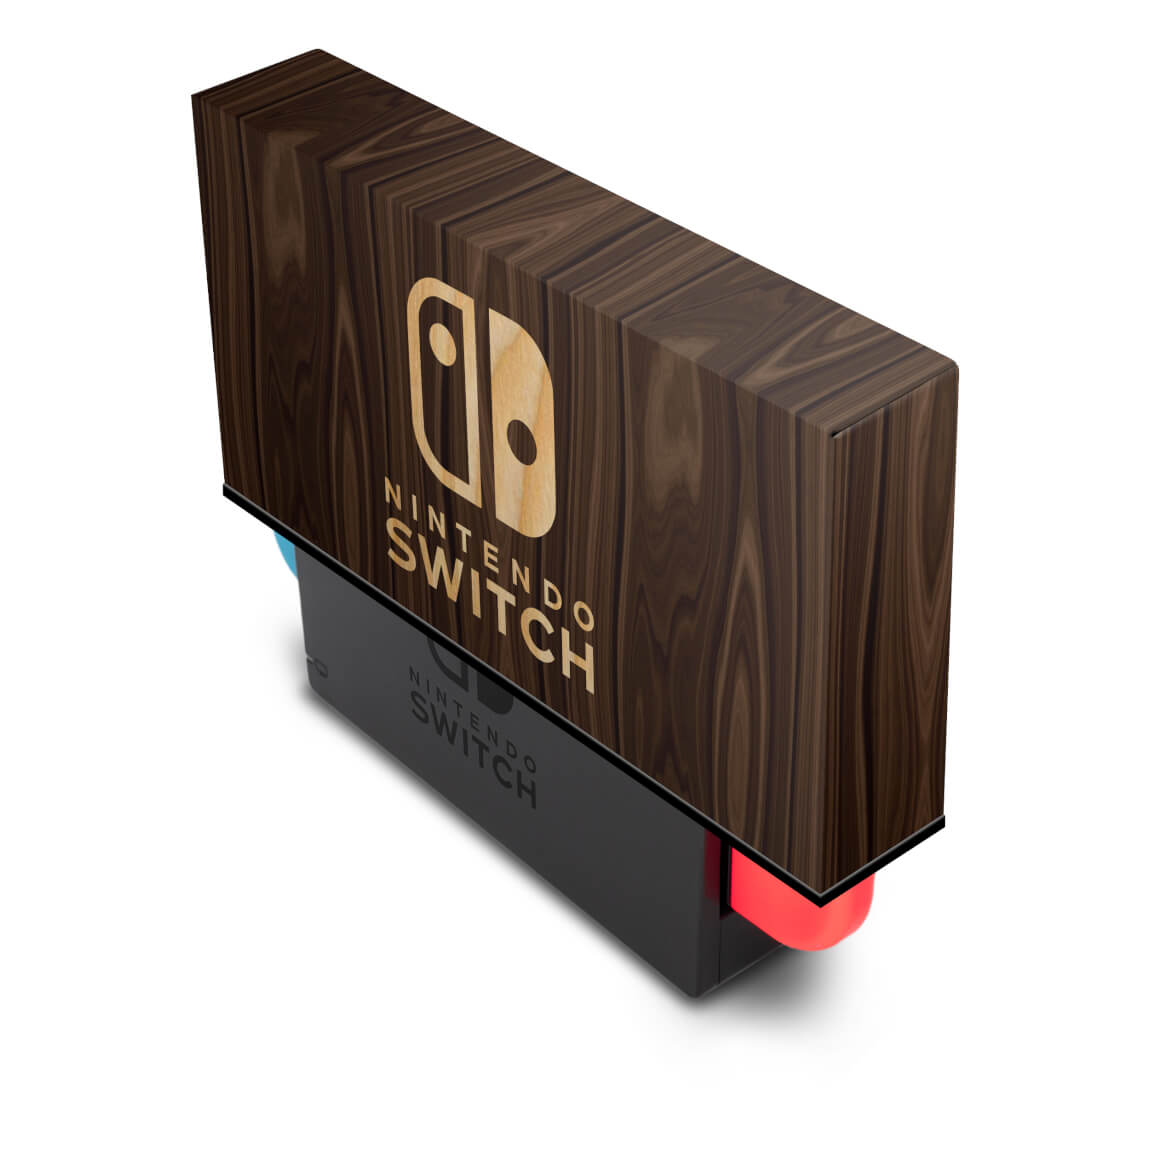 Nintendo Switch Capa Anti Poeira - Zelda Ocarina Of Time - Pop Arte Skins